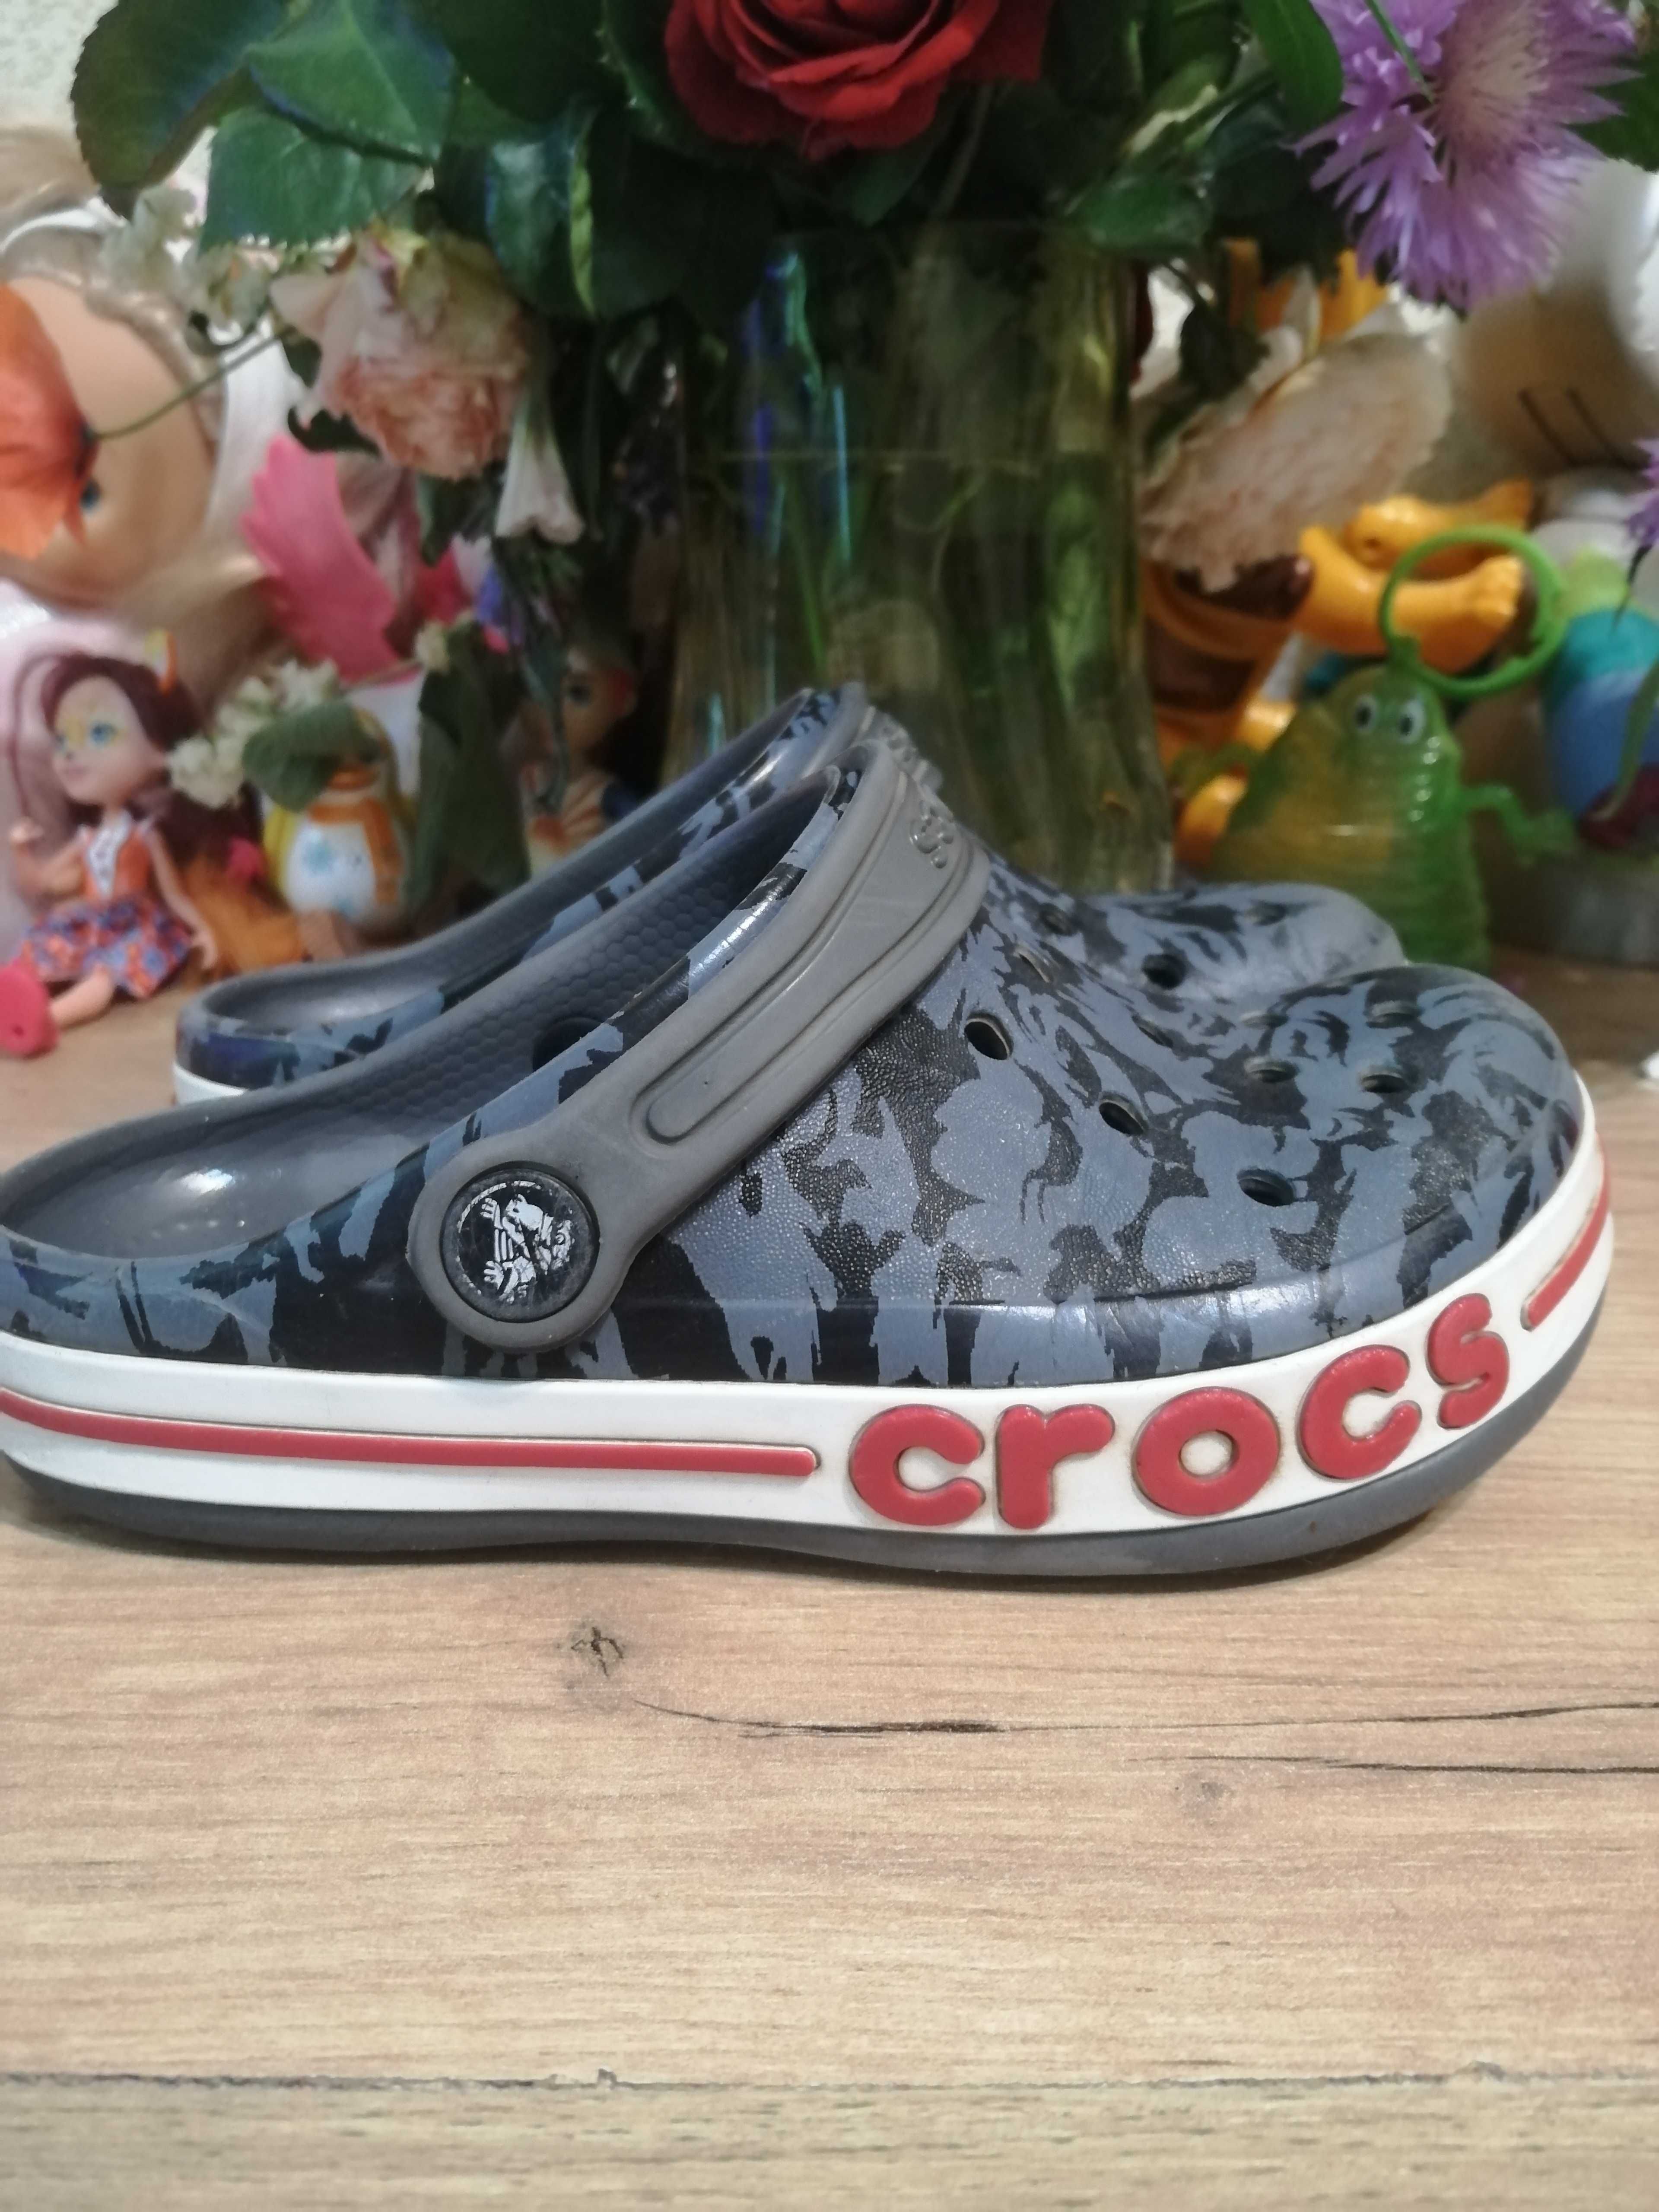 Crocs cандали для мальчика ботиночки для девочки